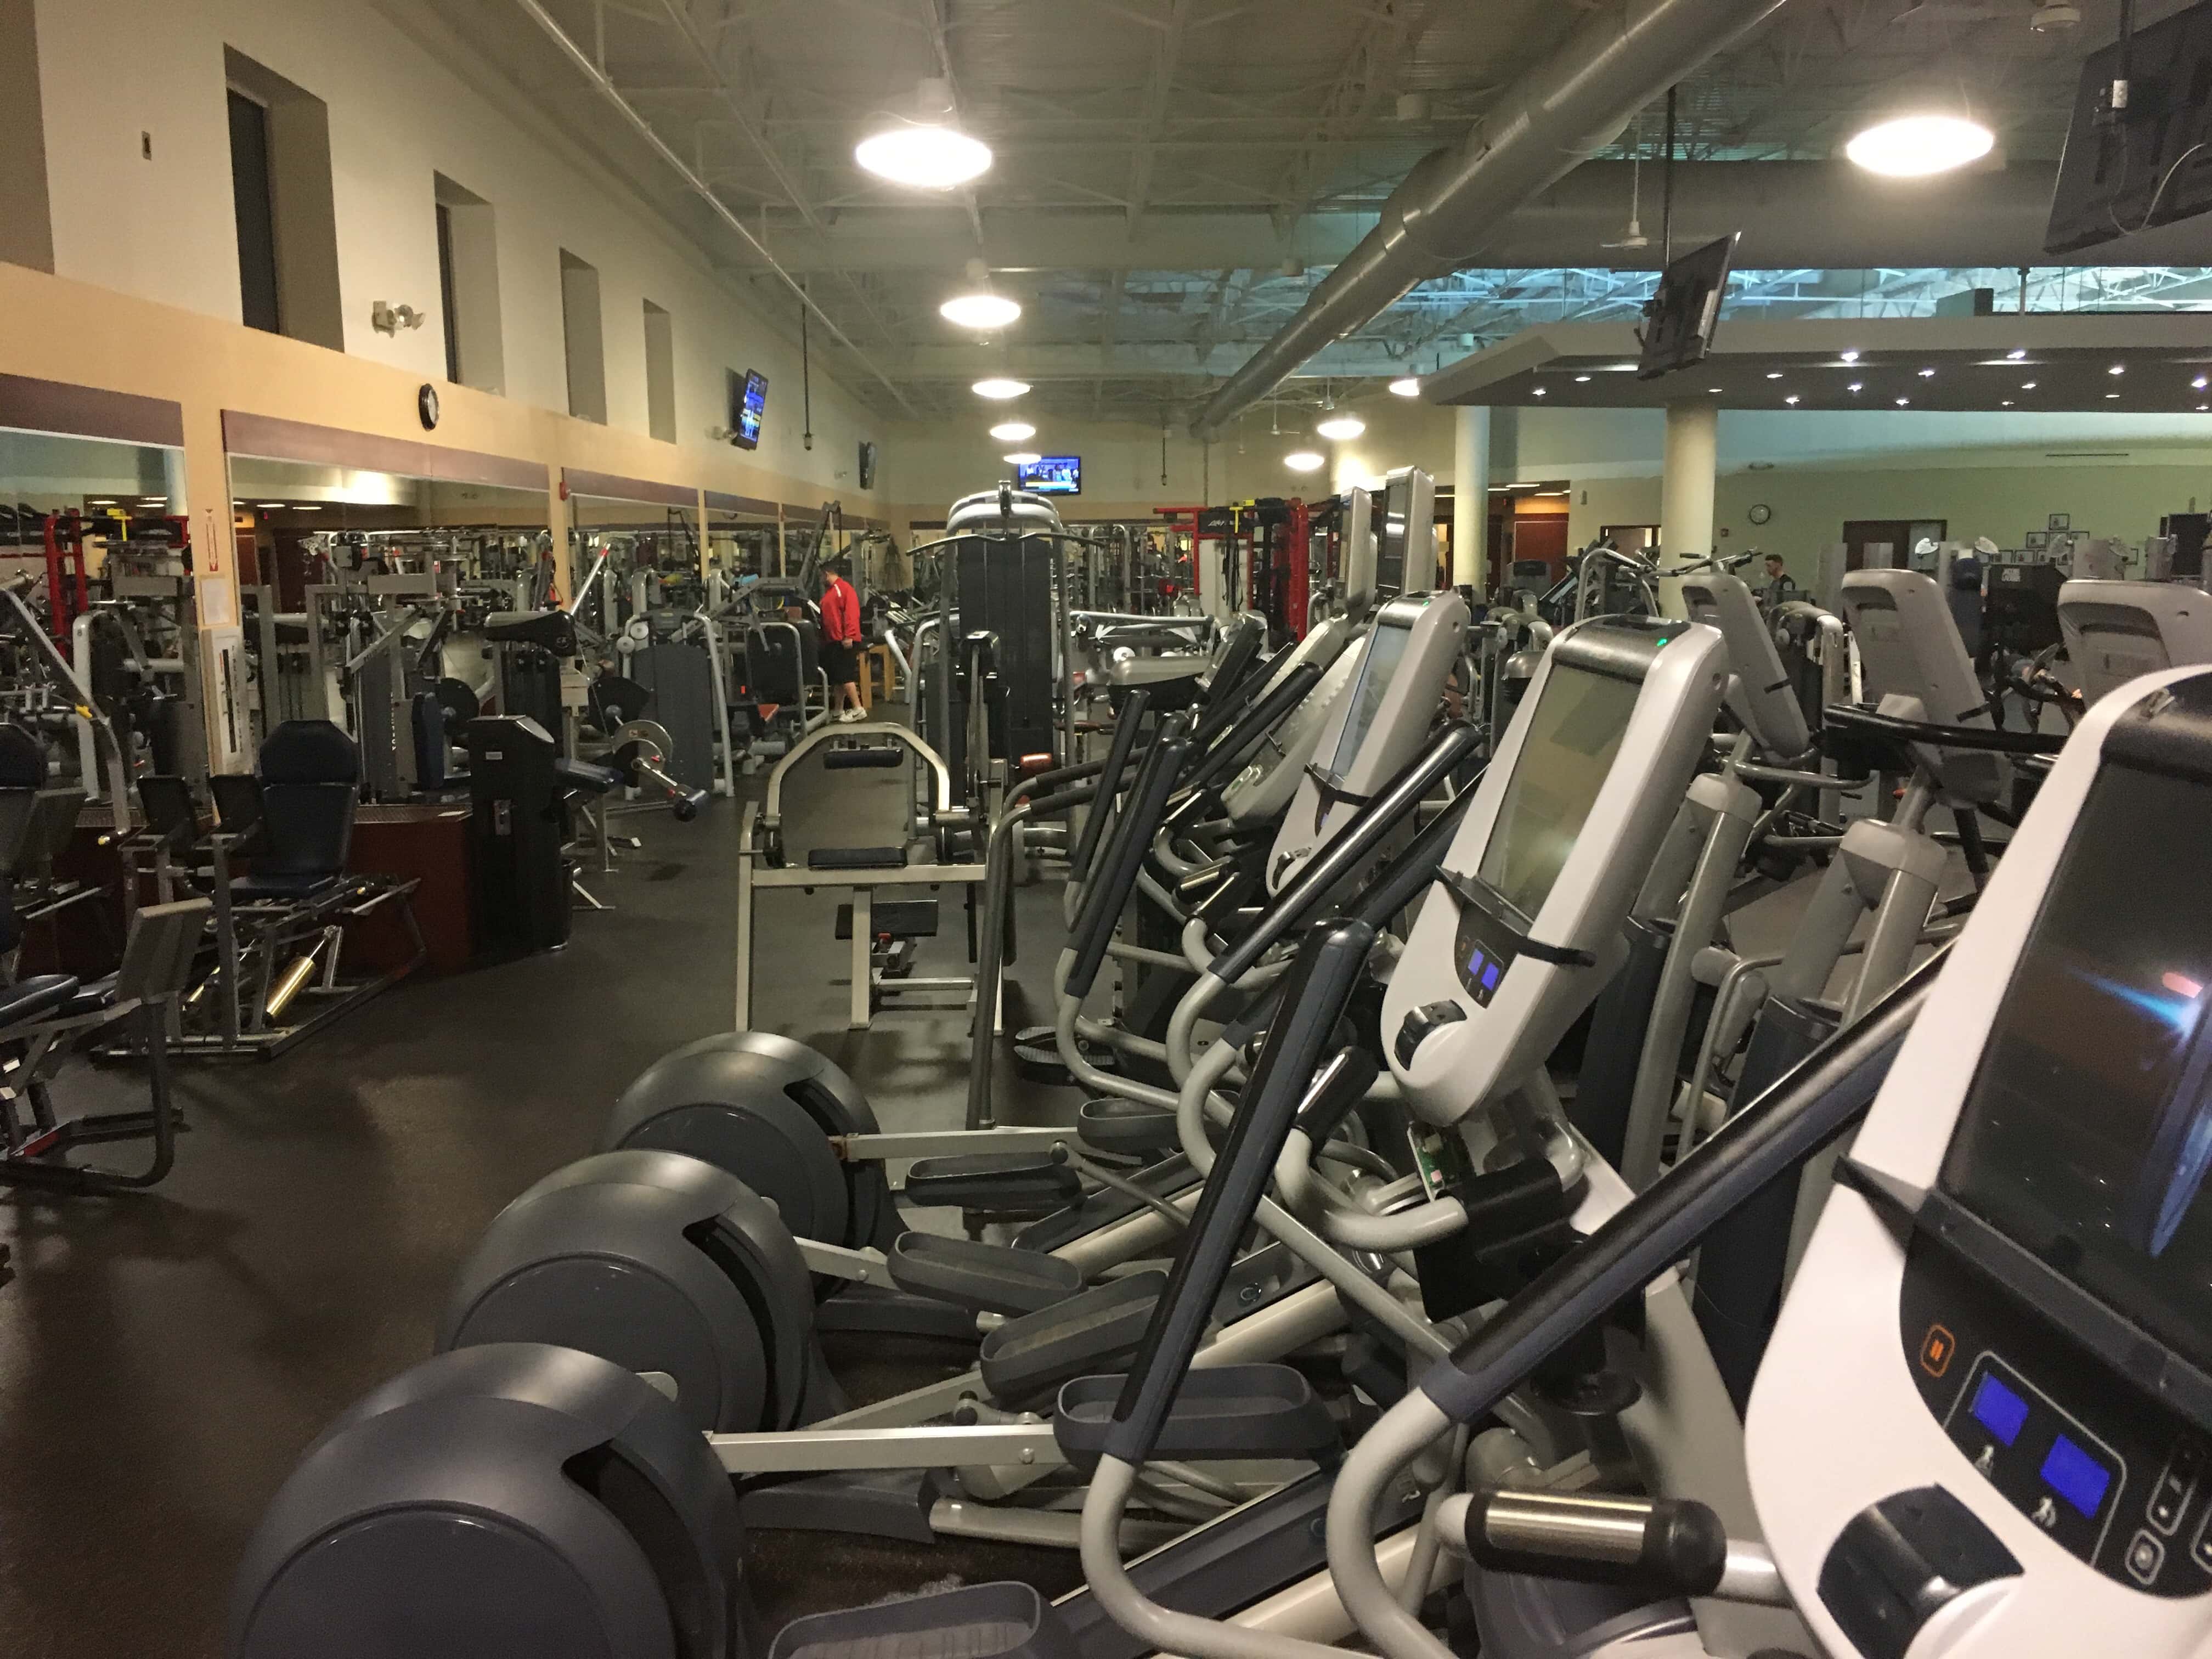 RWJ Fitness & Wellness Center - Hamilton Township, NJ, US, hamstring workouts